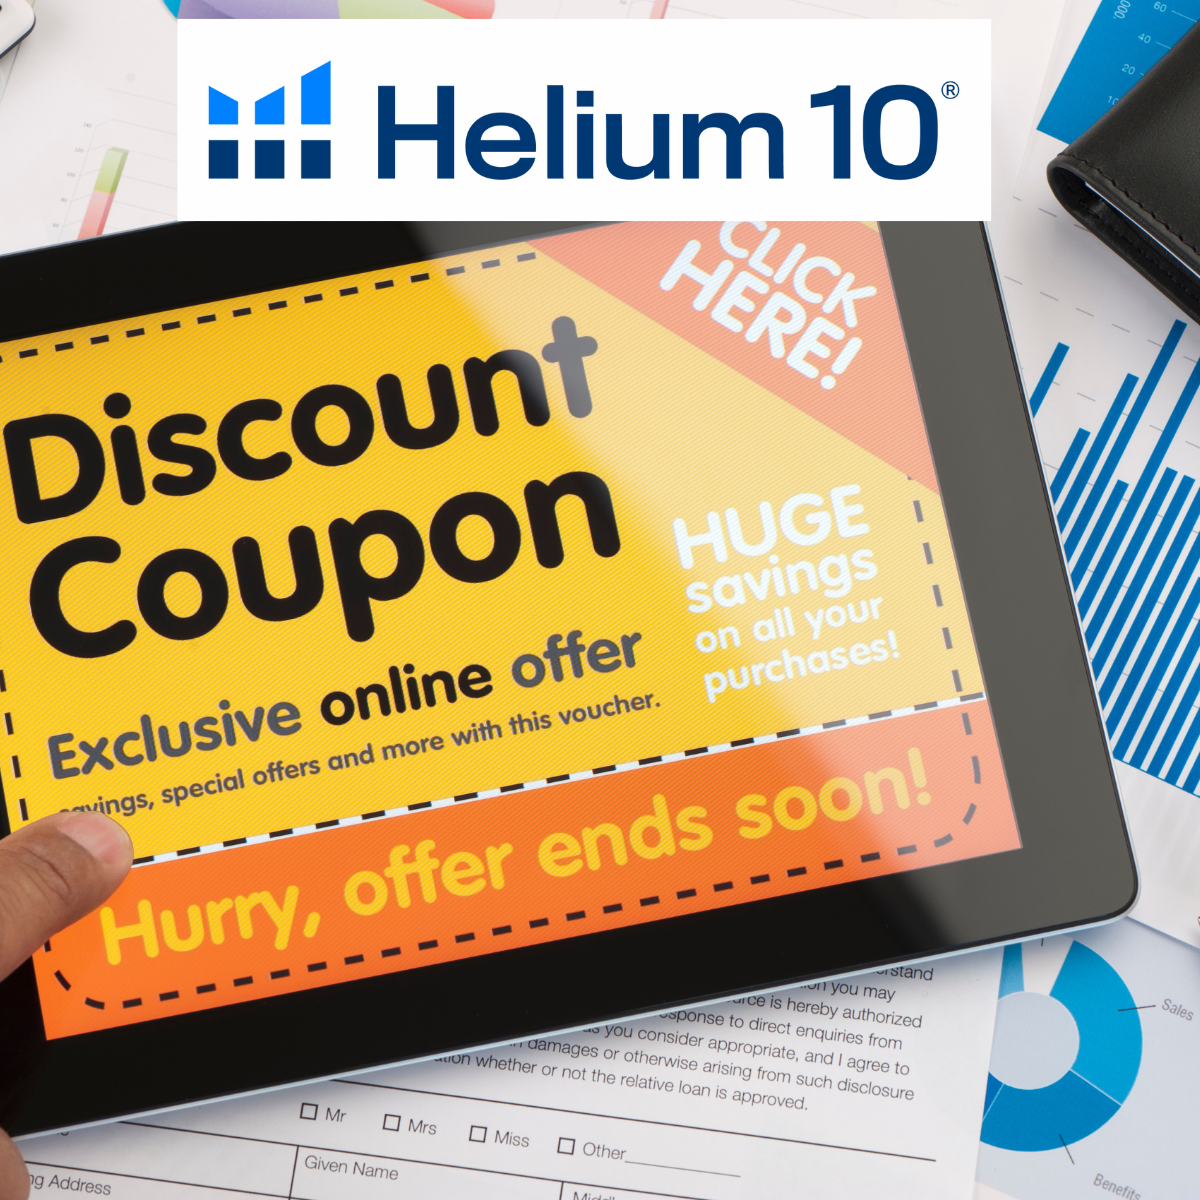 Helium 10 discount code